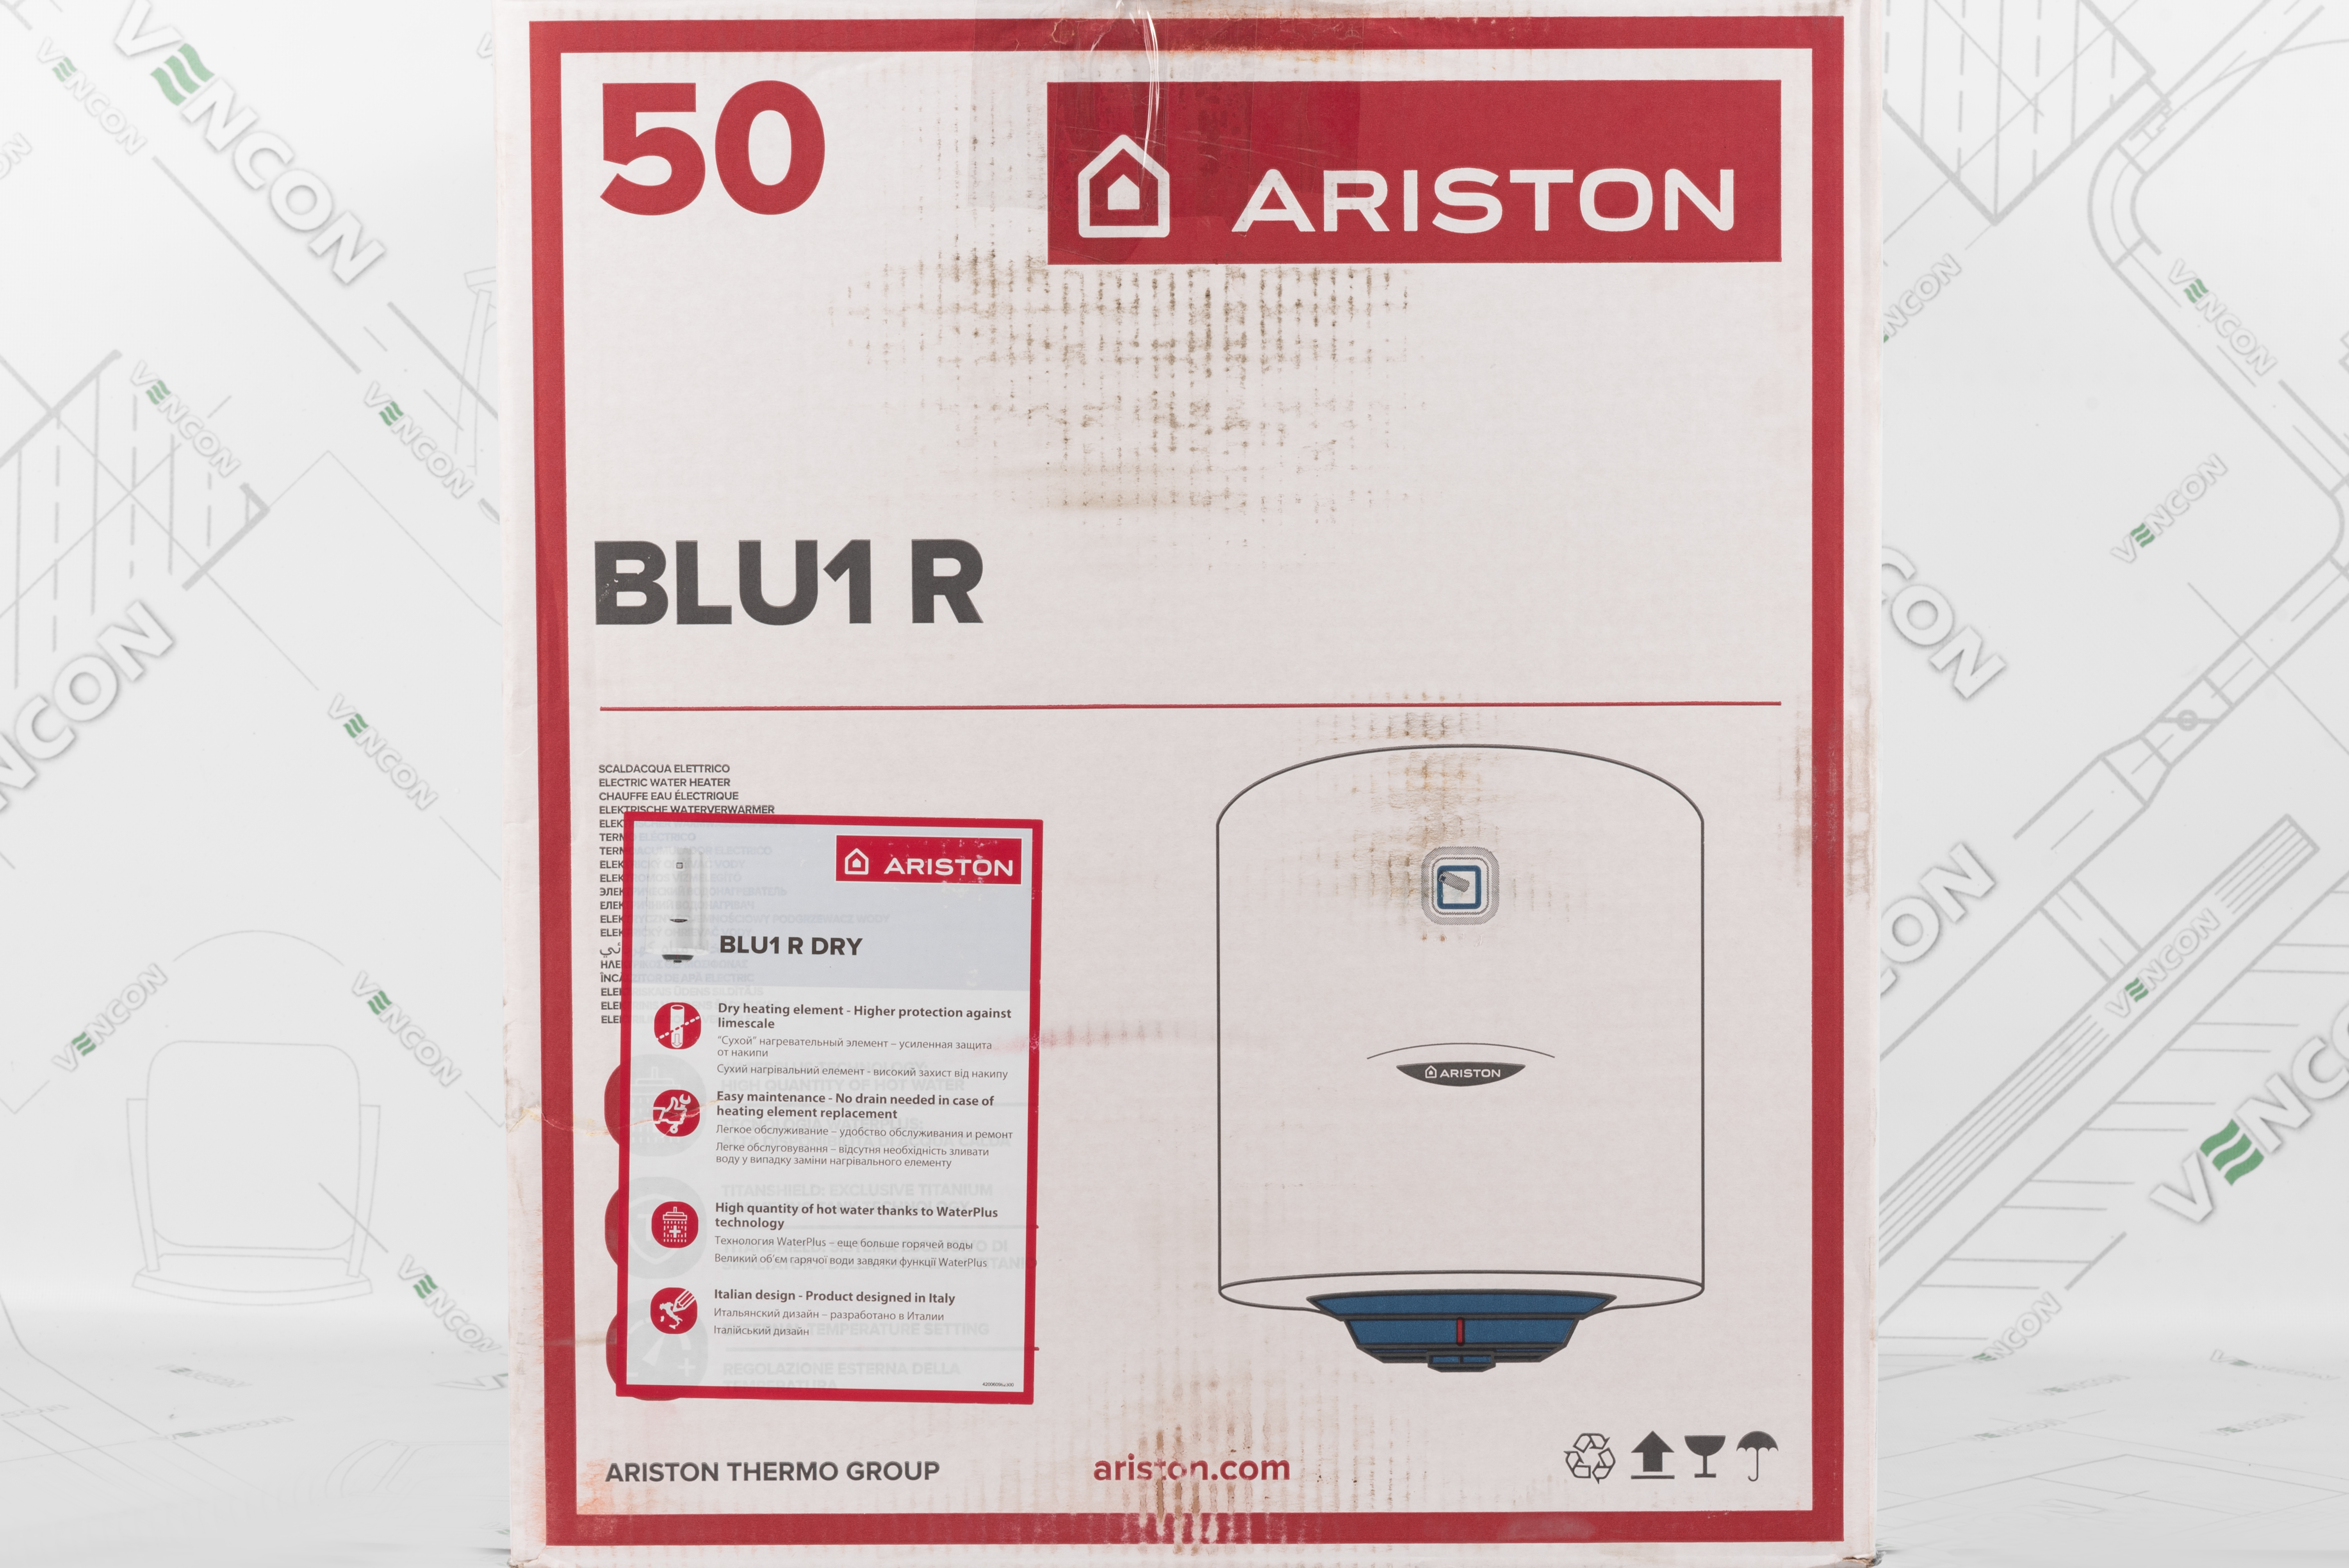 Ariston BLU1 R 50 V 1.5 К PL DRY в магазине - фото 17